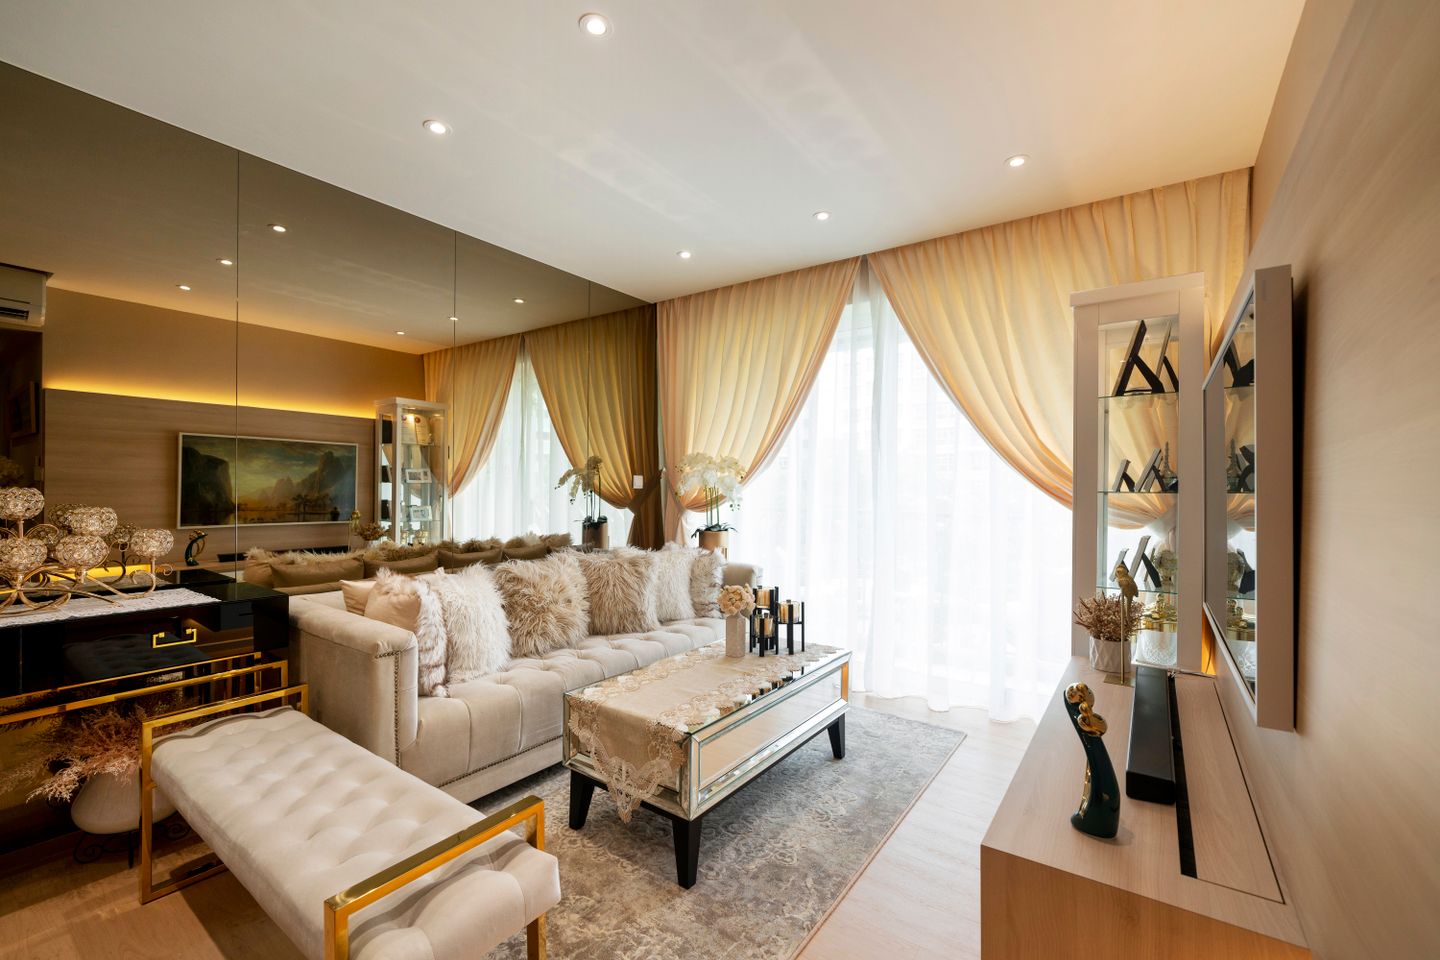 Contemporary Luxury Interior Design For Bedrooms - Livspace